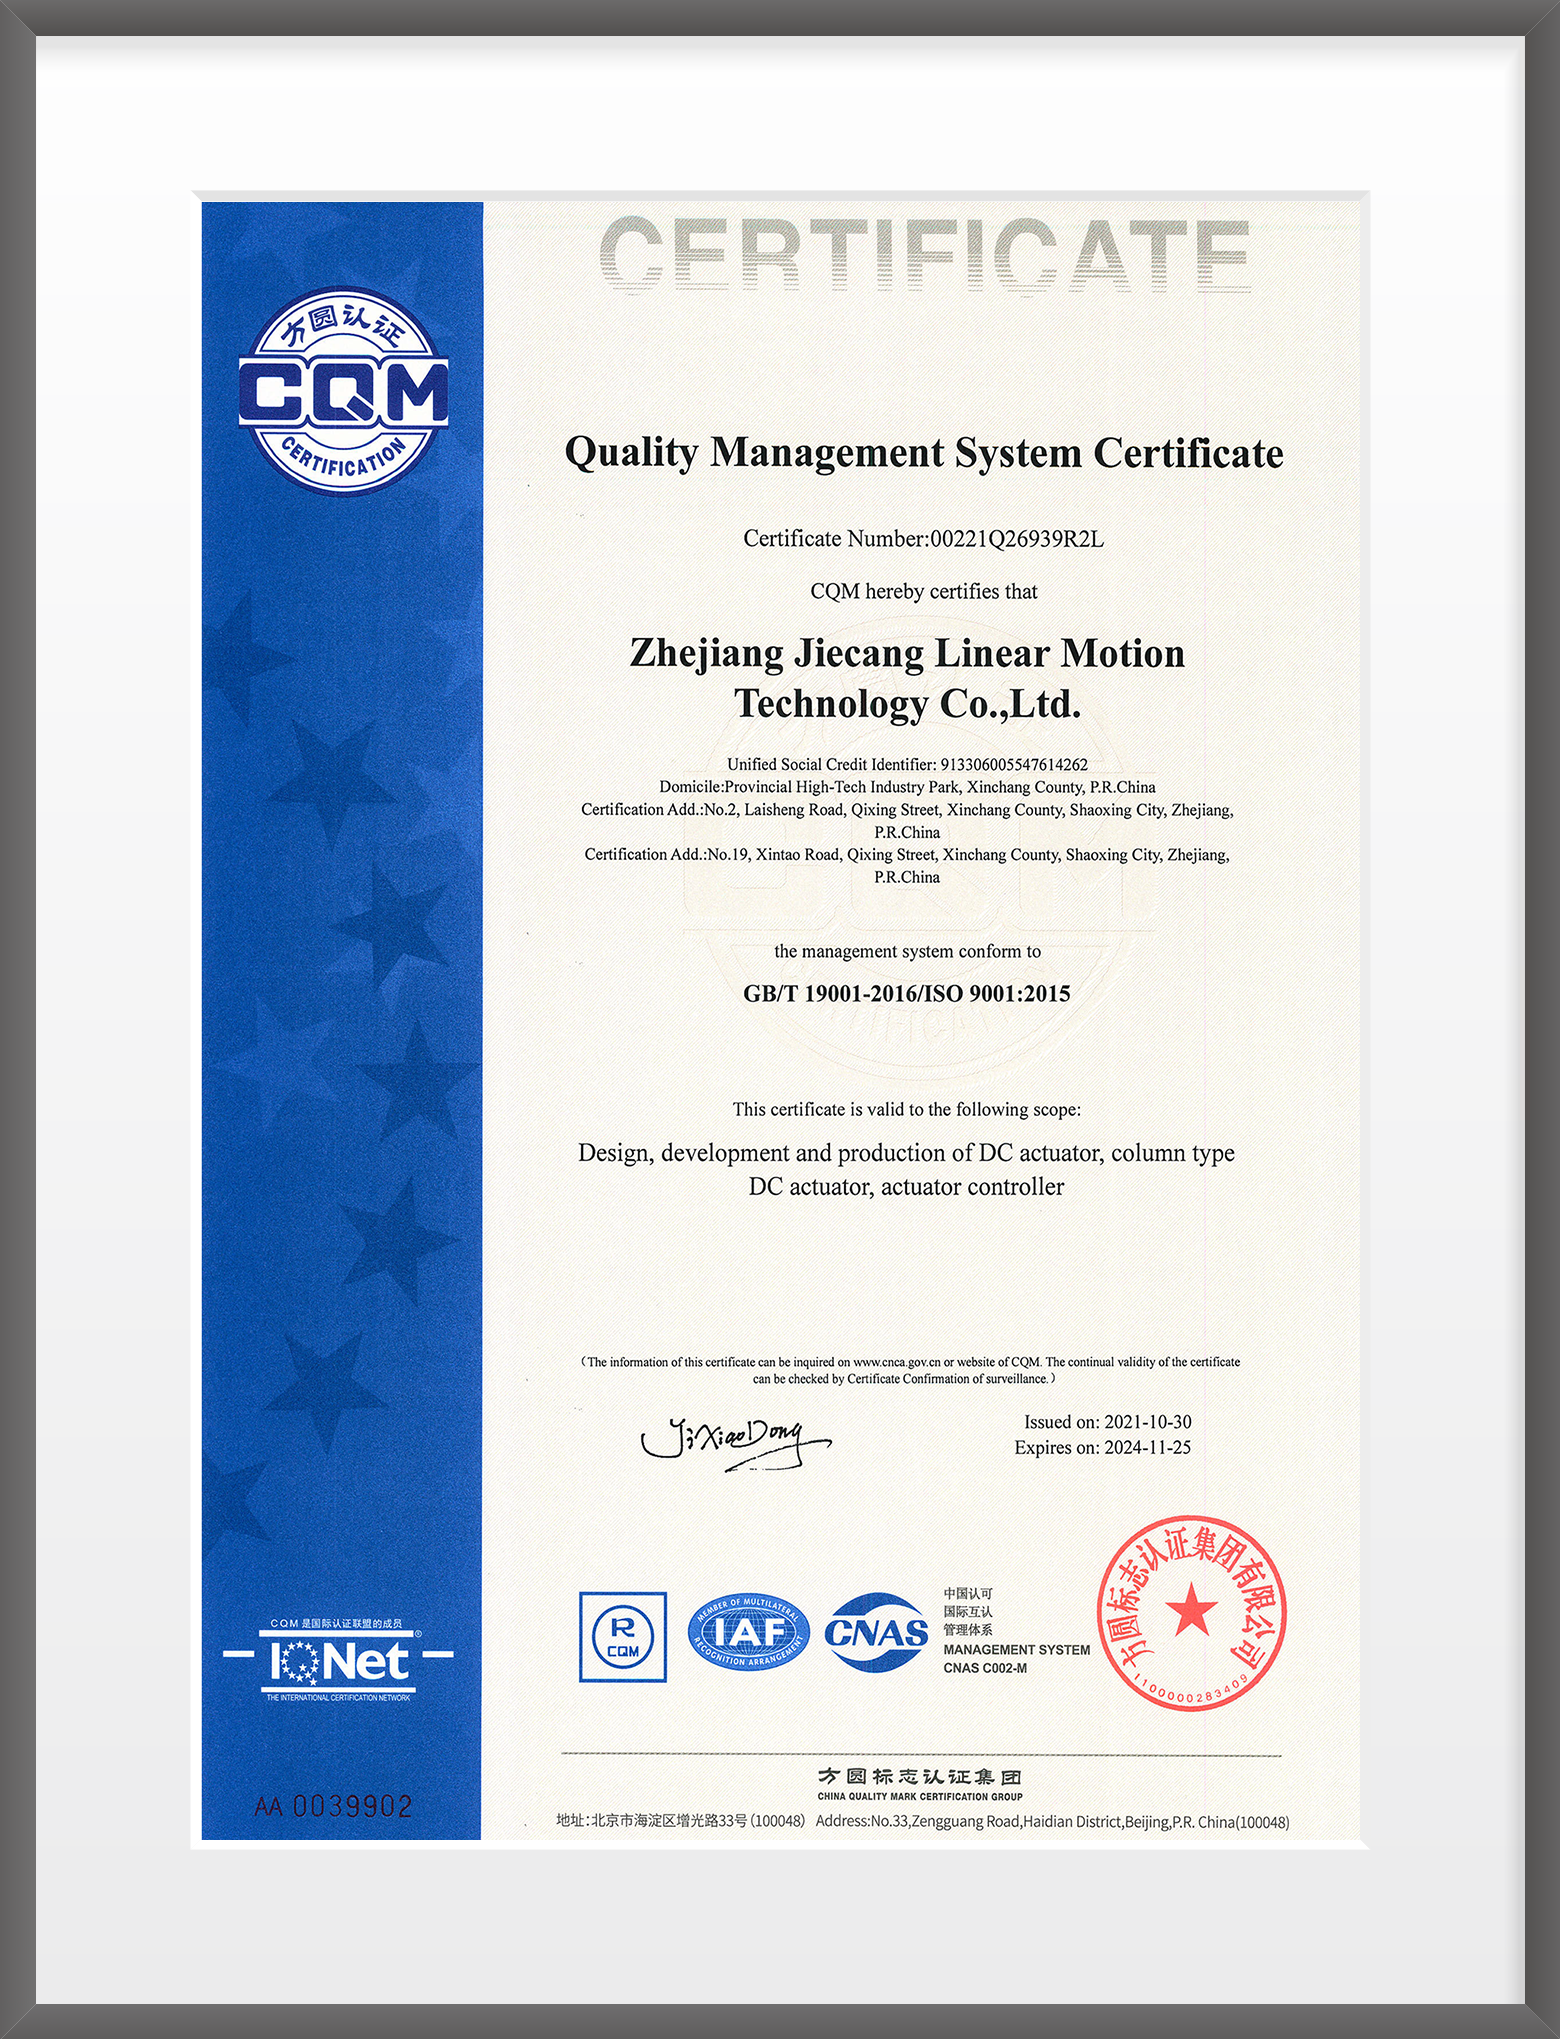 Quality Management System Certificate - Jiechang+Heshikai